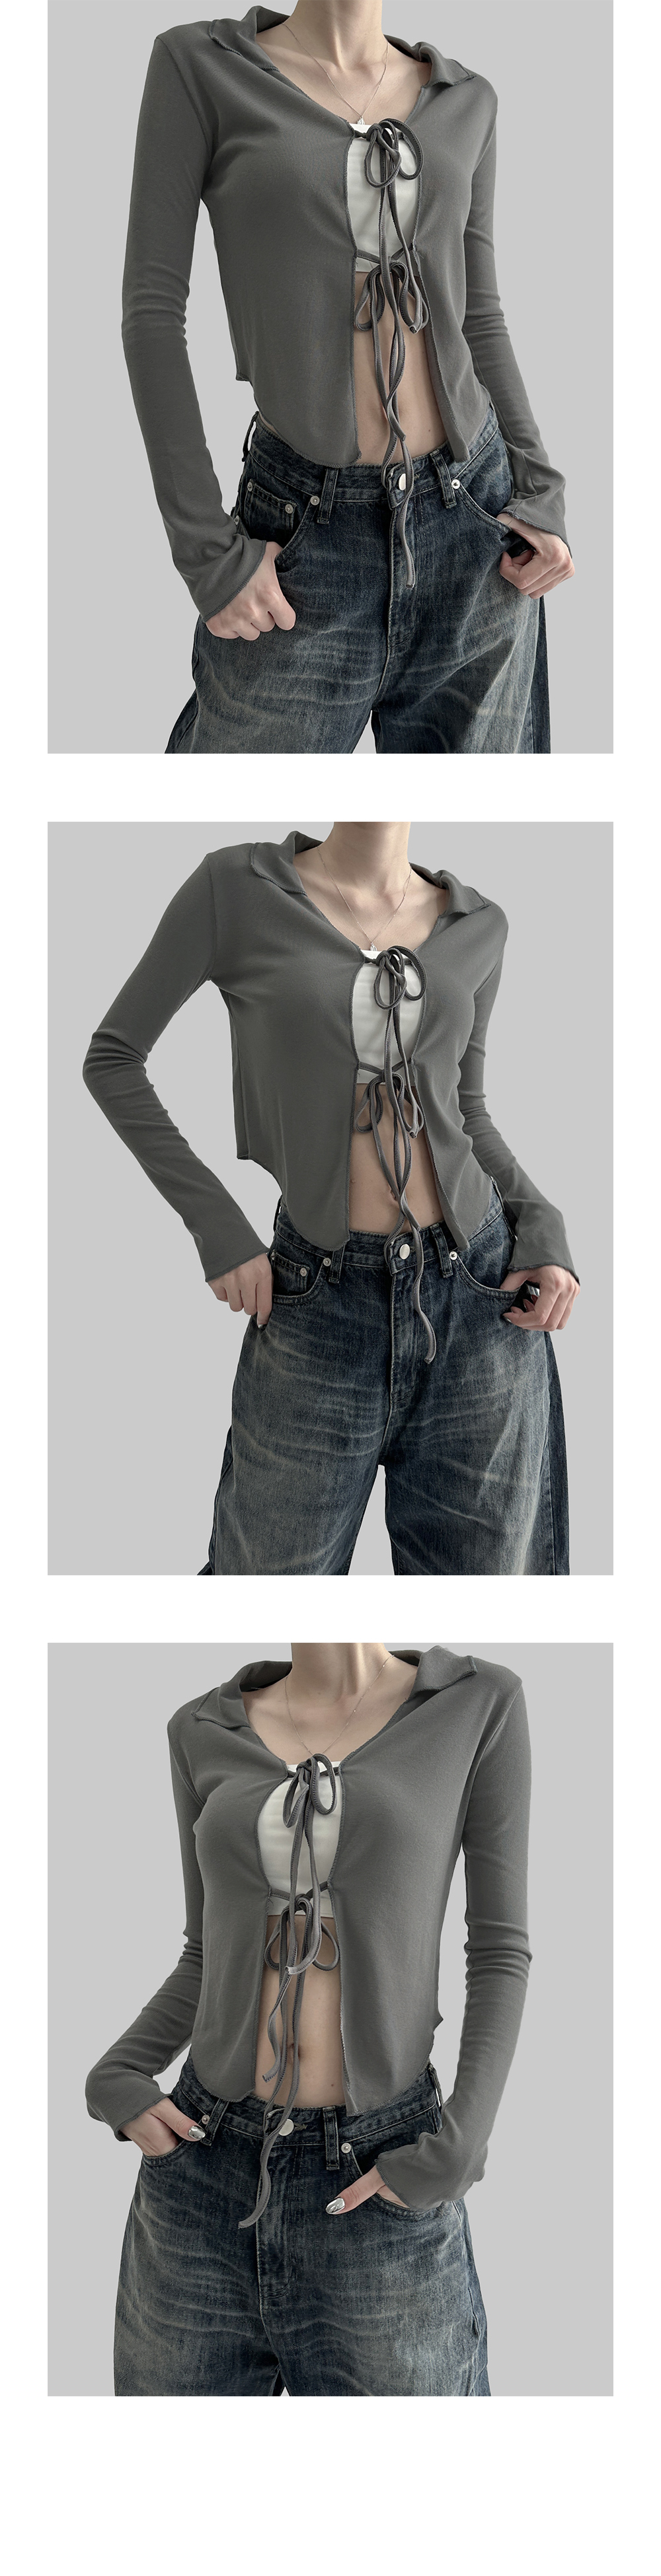 suspenders skirt/pants model image-S2L11